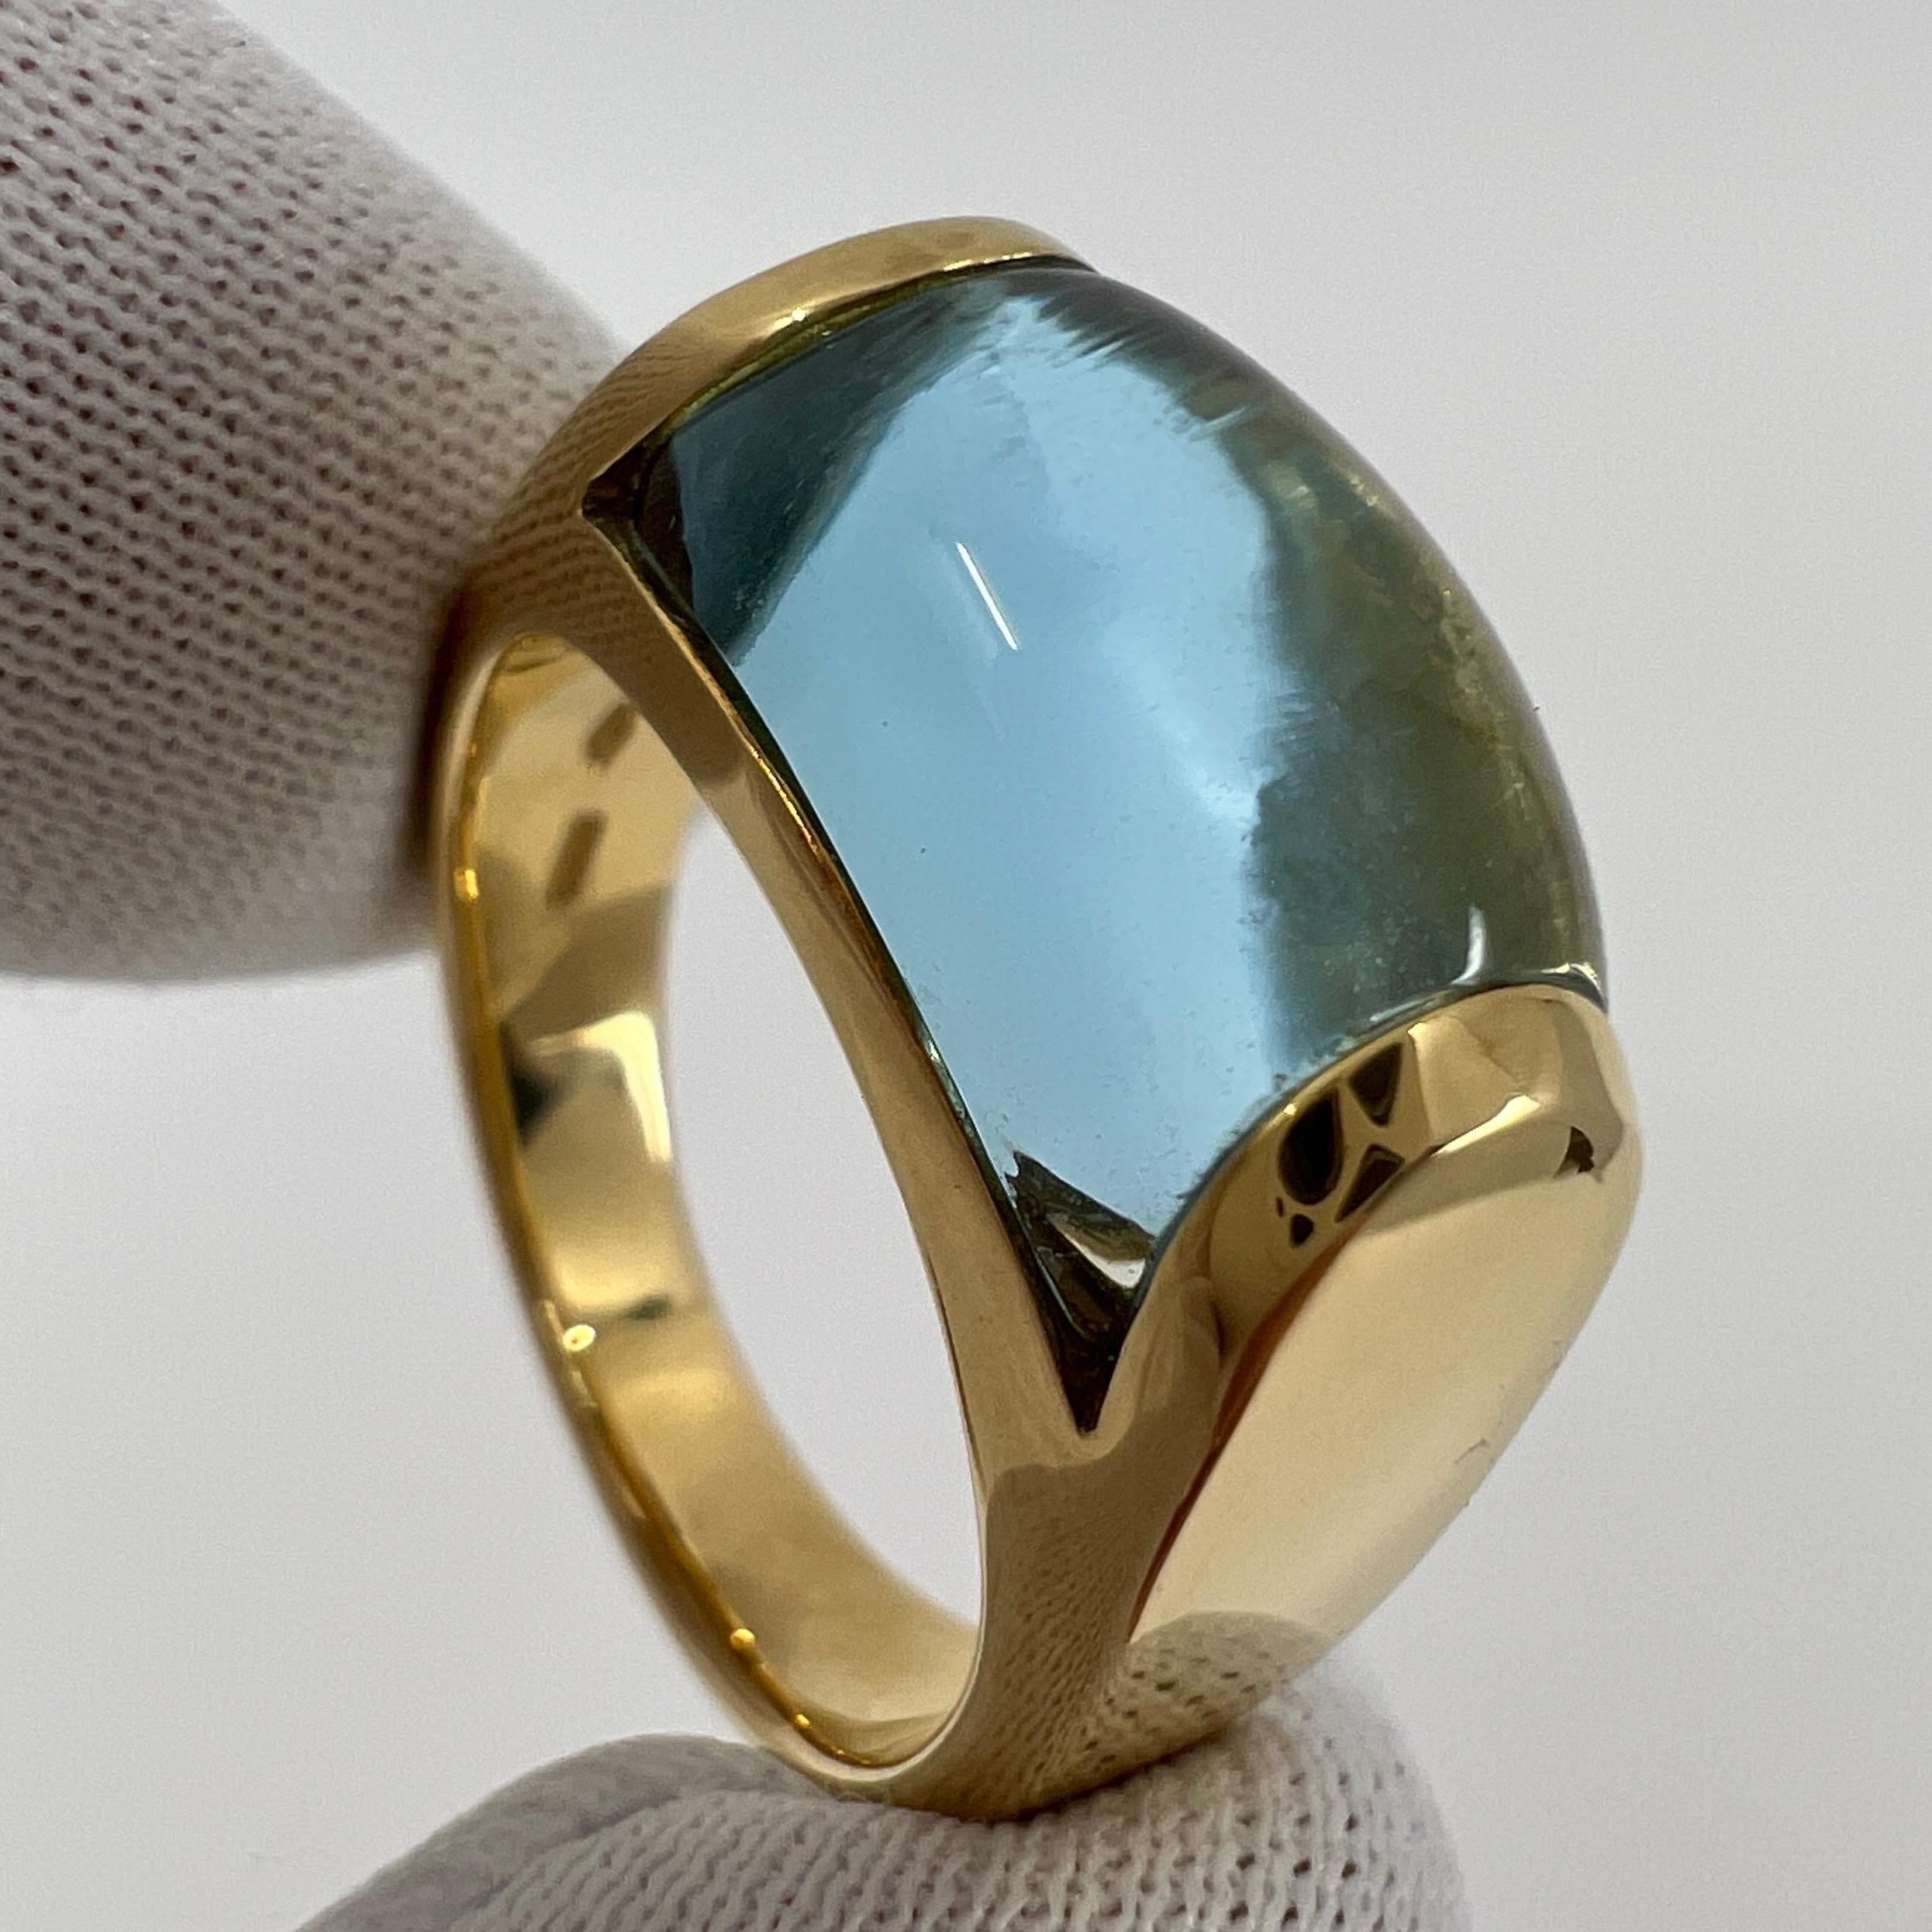 Vintage Bvlgari Tronchetto 18k Yellow Gold Blue Topaz Dome Ring with Box 5